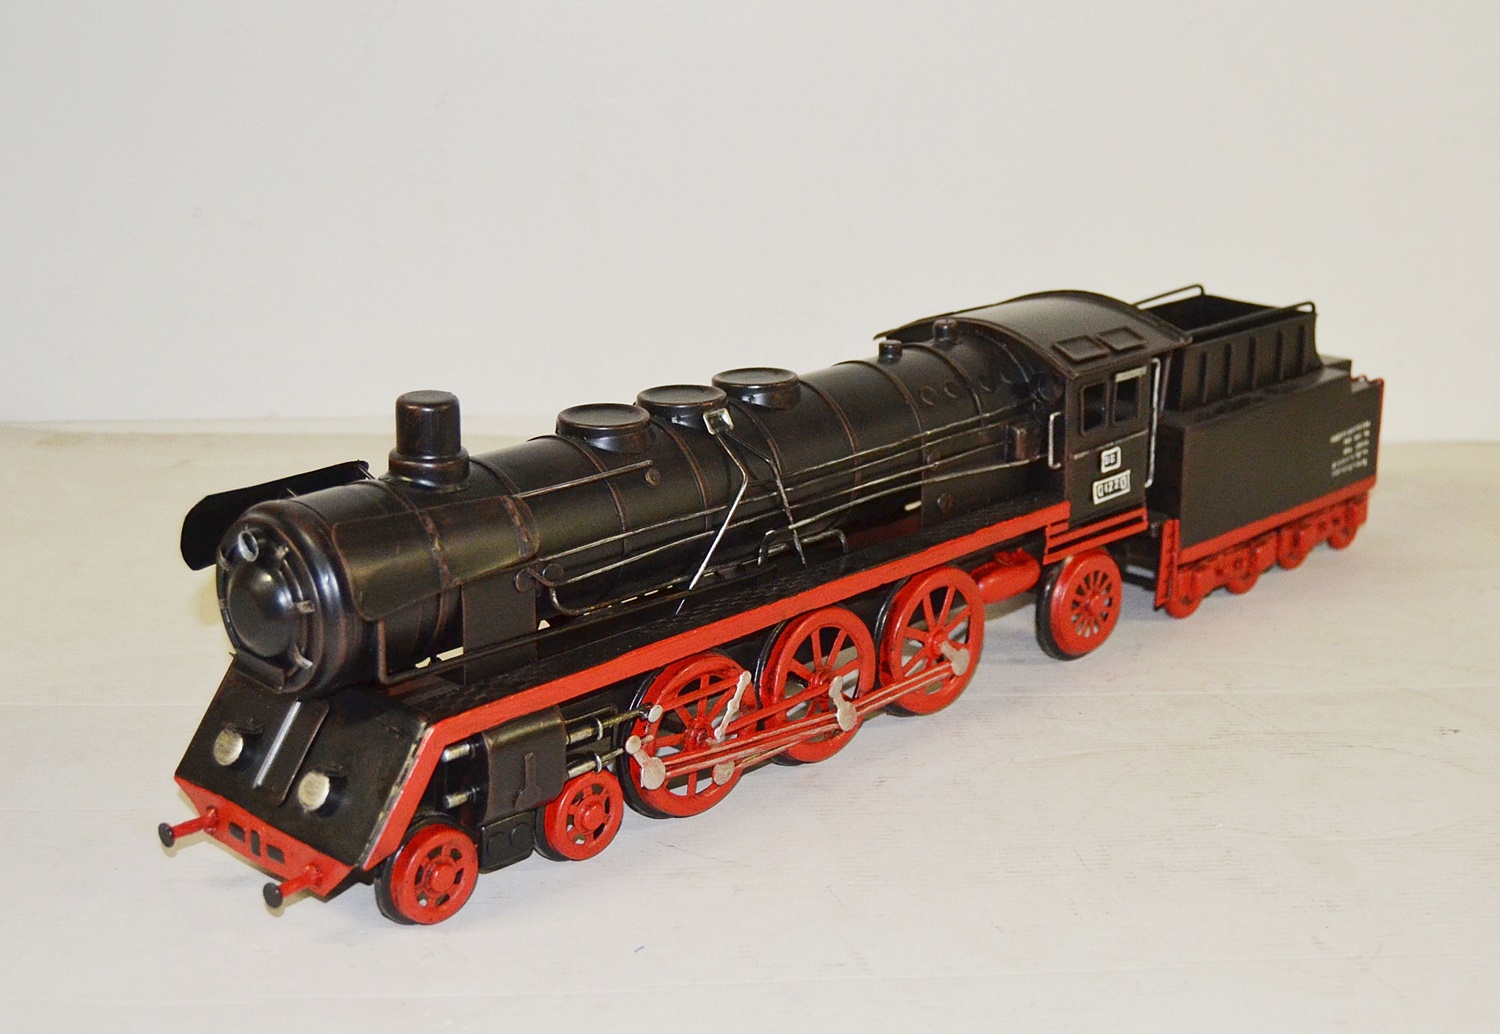 Nostalgie Modell Oldtimer Dampflok Dampflokomotive Dampfkraftwagen Dampfautomobi 